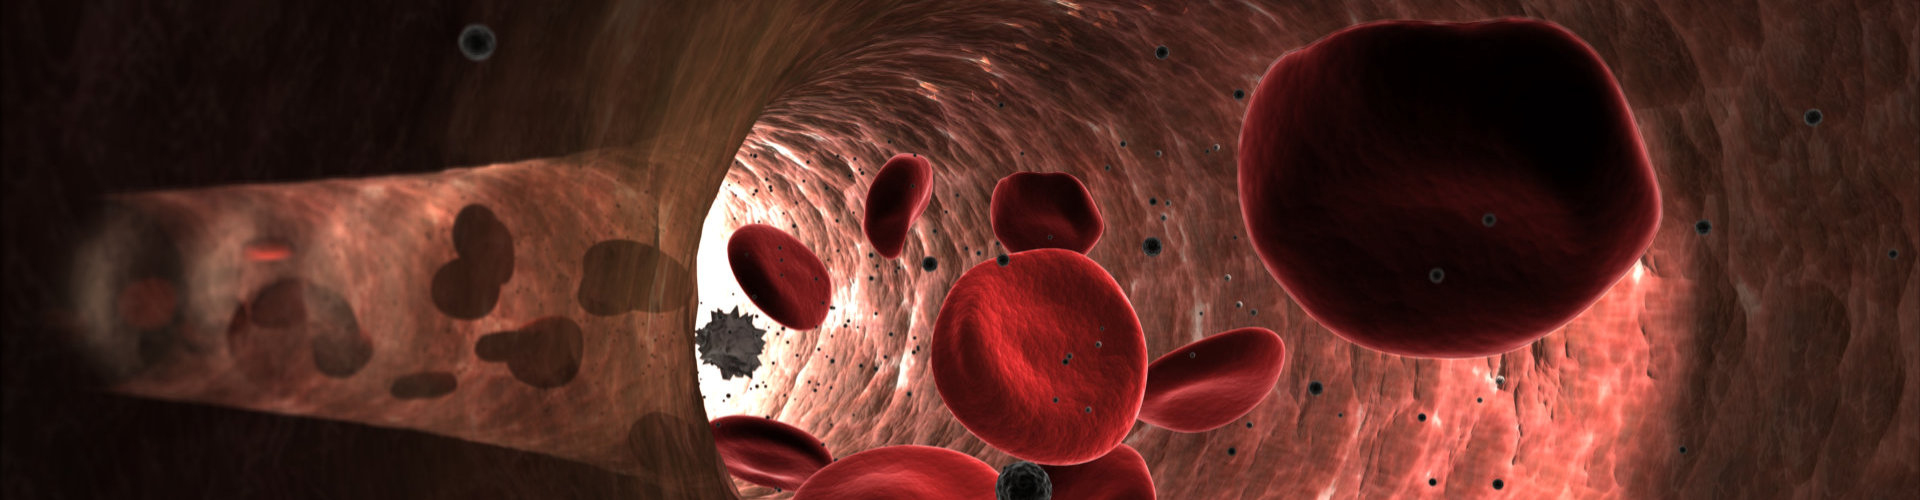 hemoglobin - red blood cells